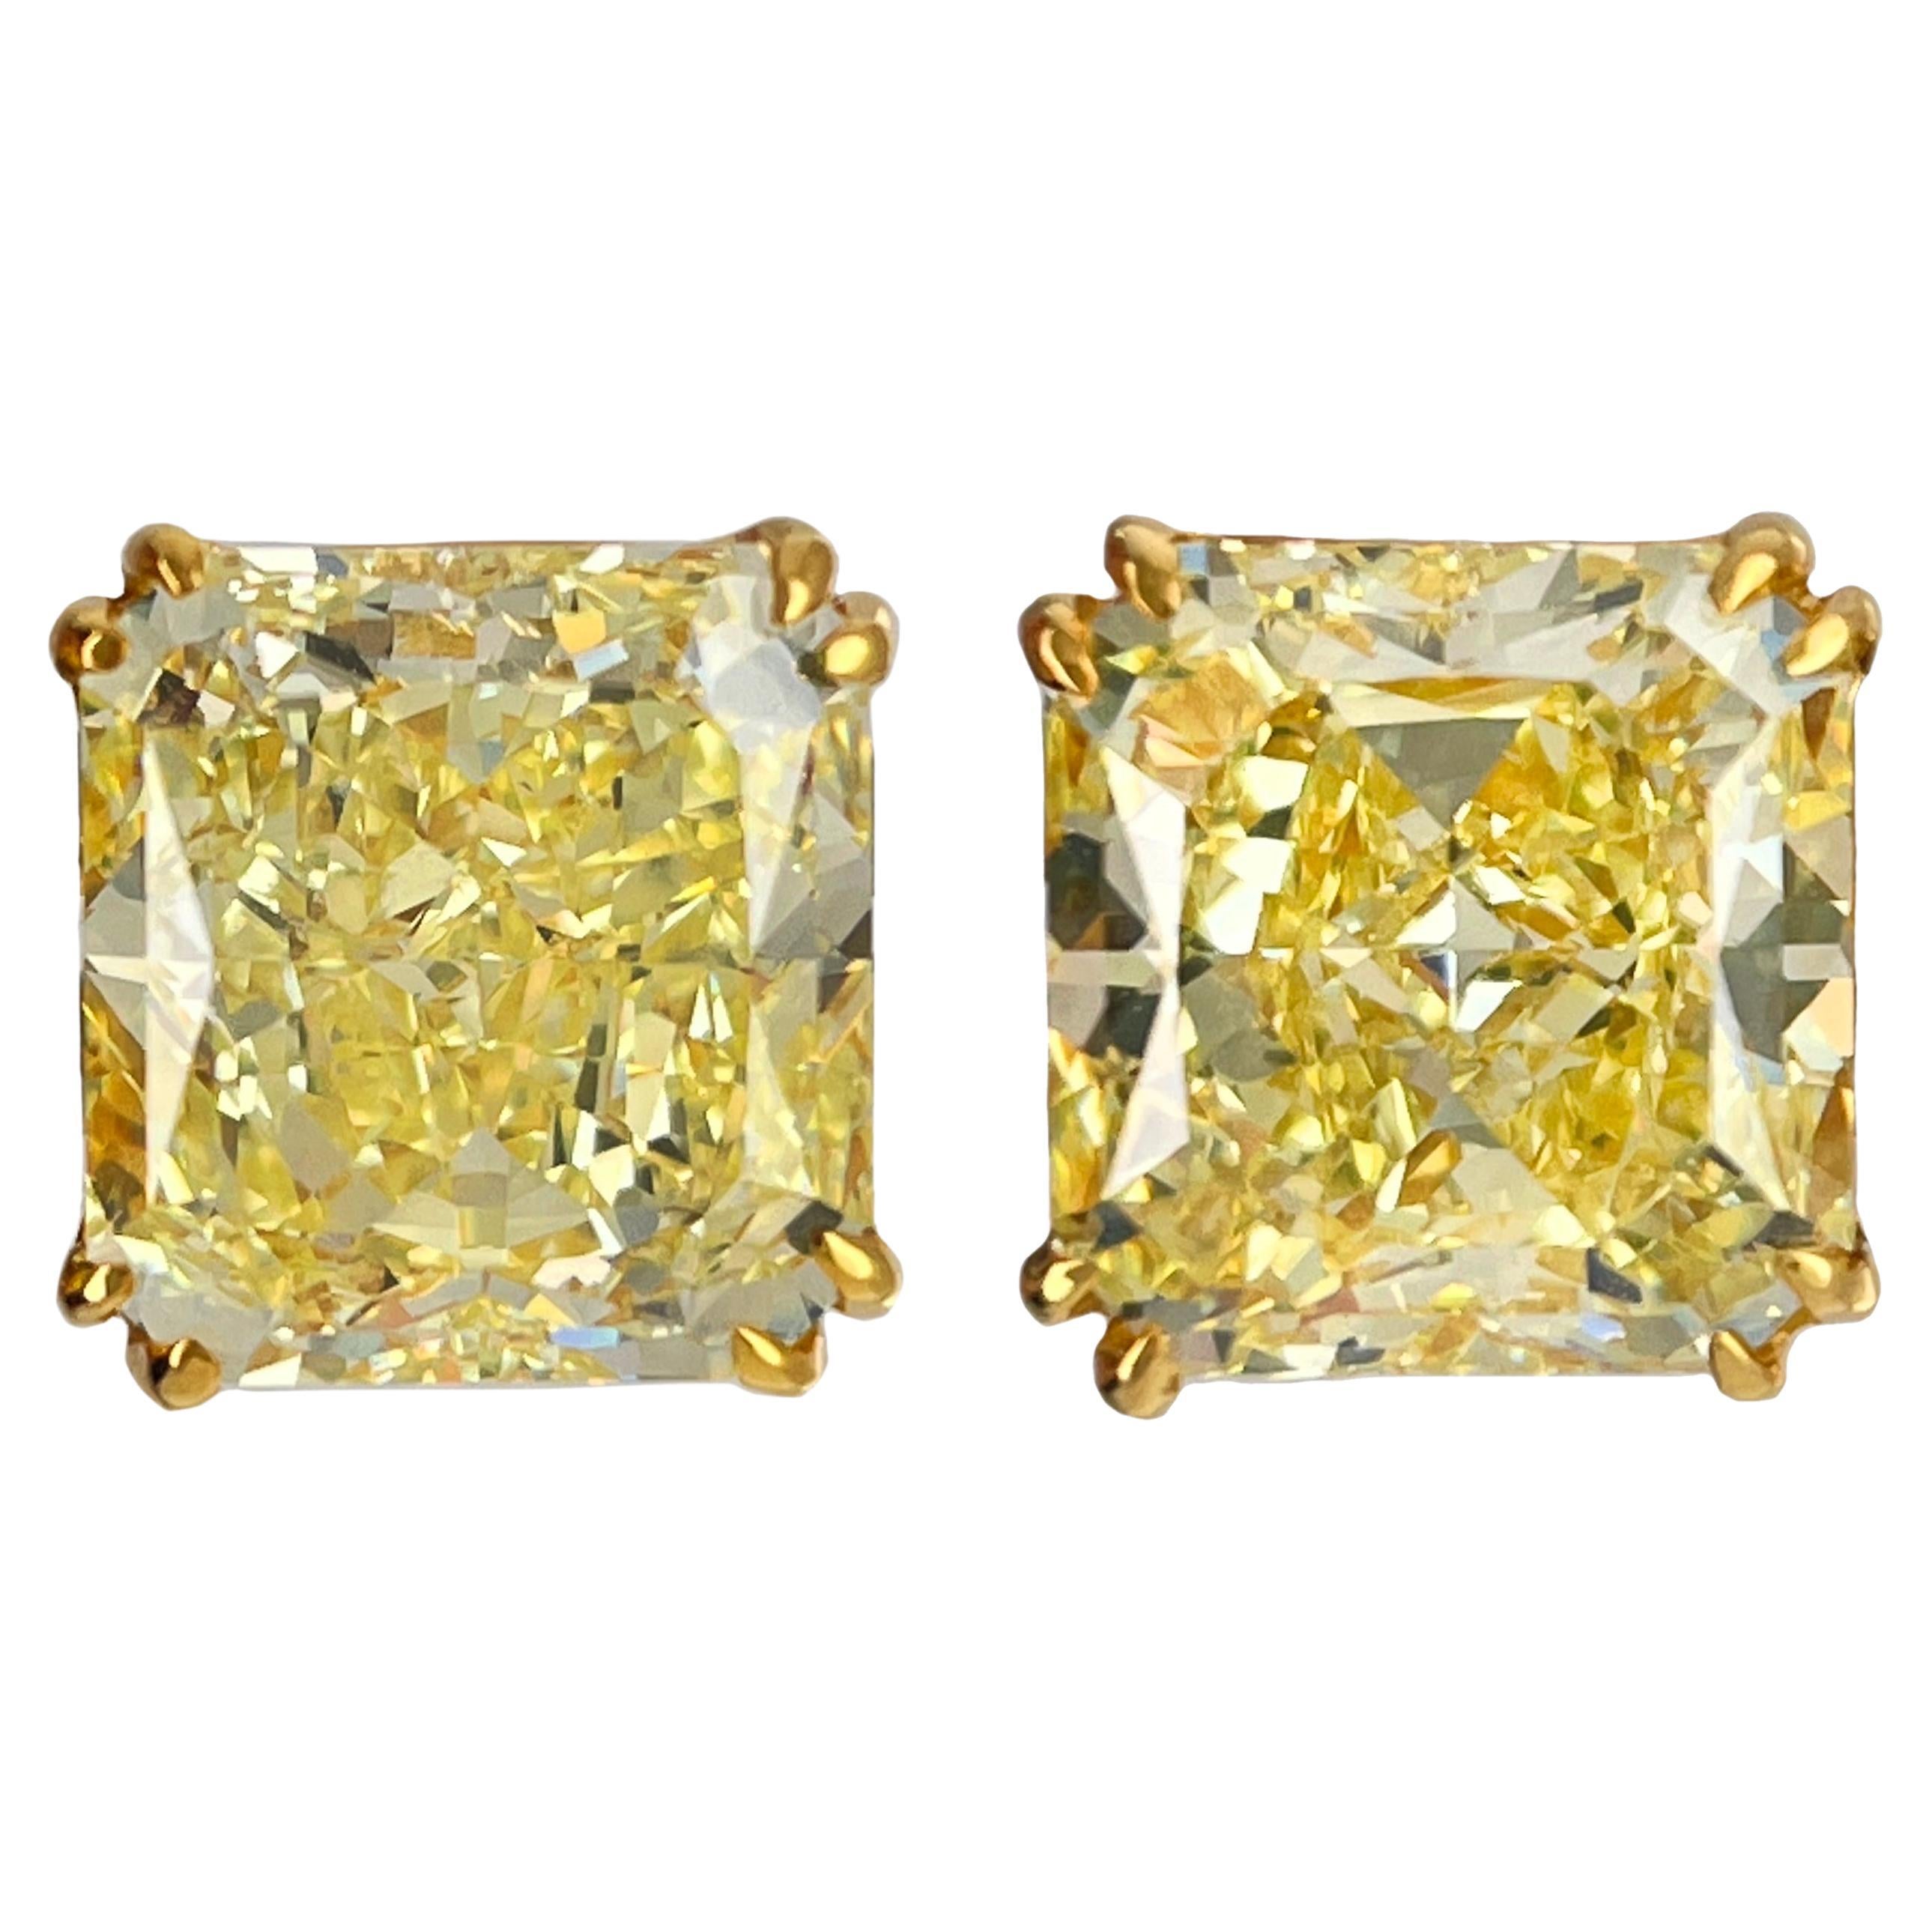 Radiant Cut Fancy Yellow Diamond Studs, 10.18 Carats T.W. GIA Certified For Sale